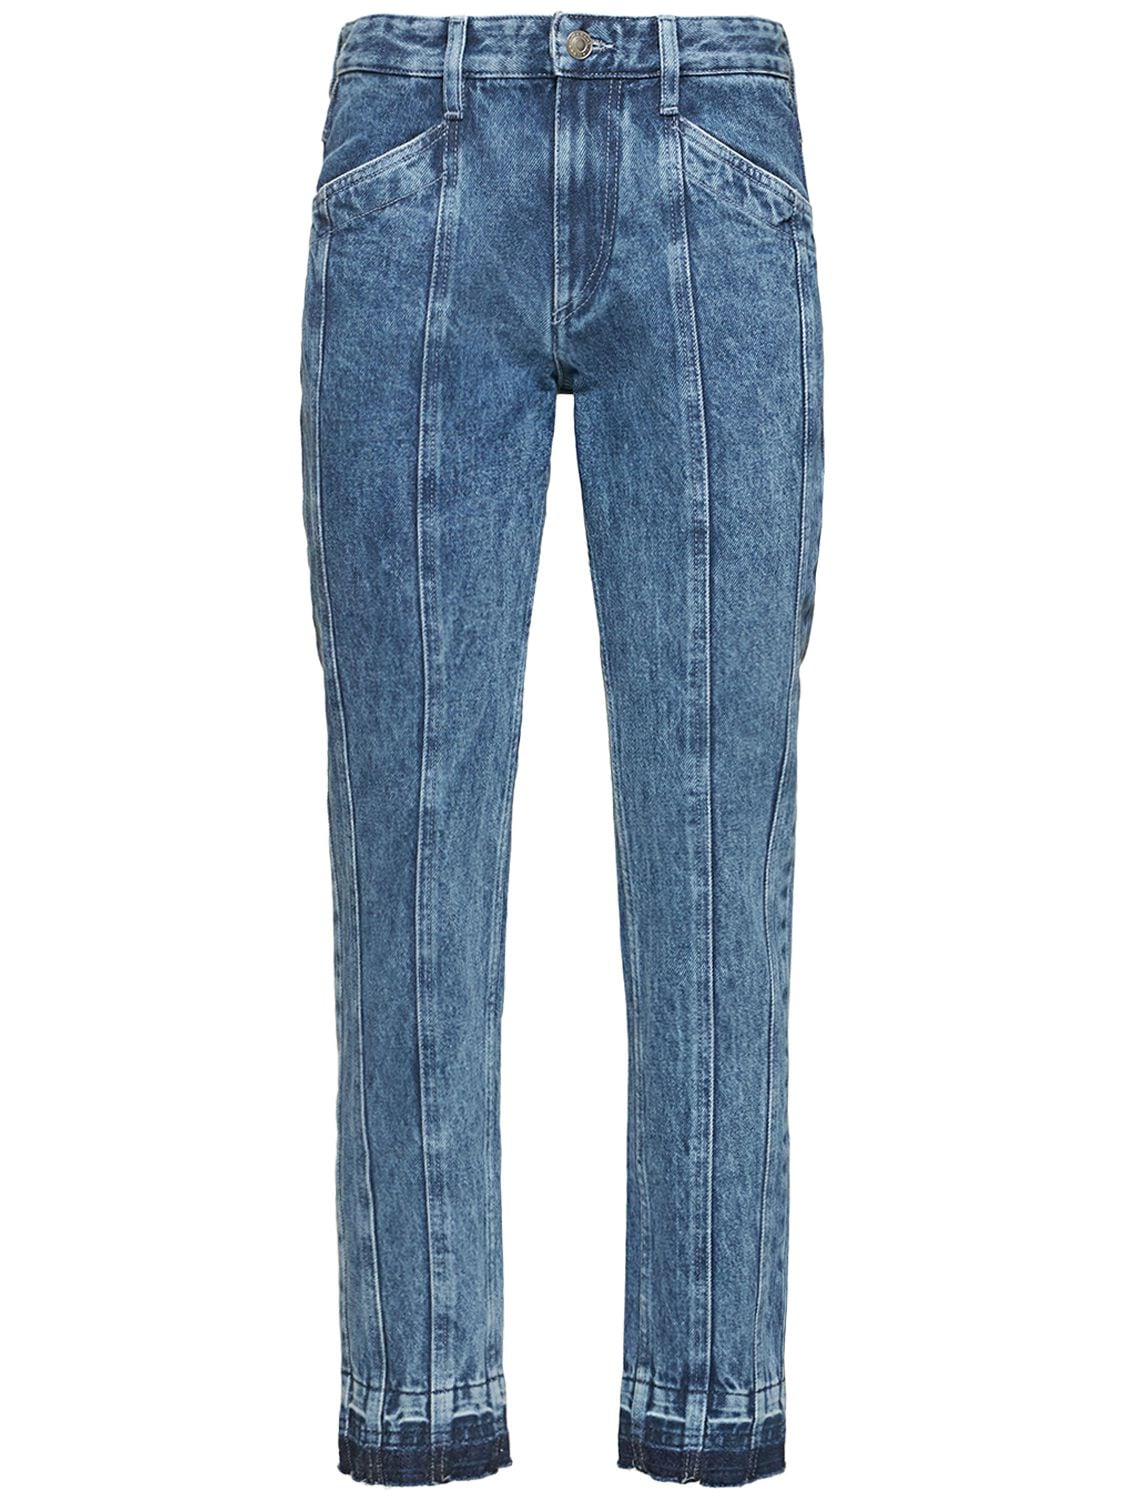 Image of Sulanoa Cotton Jeans